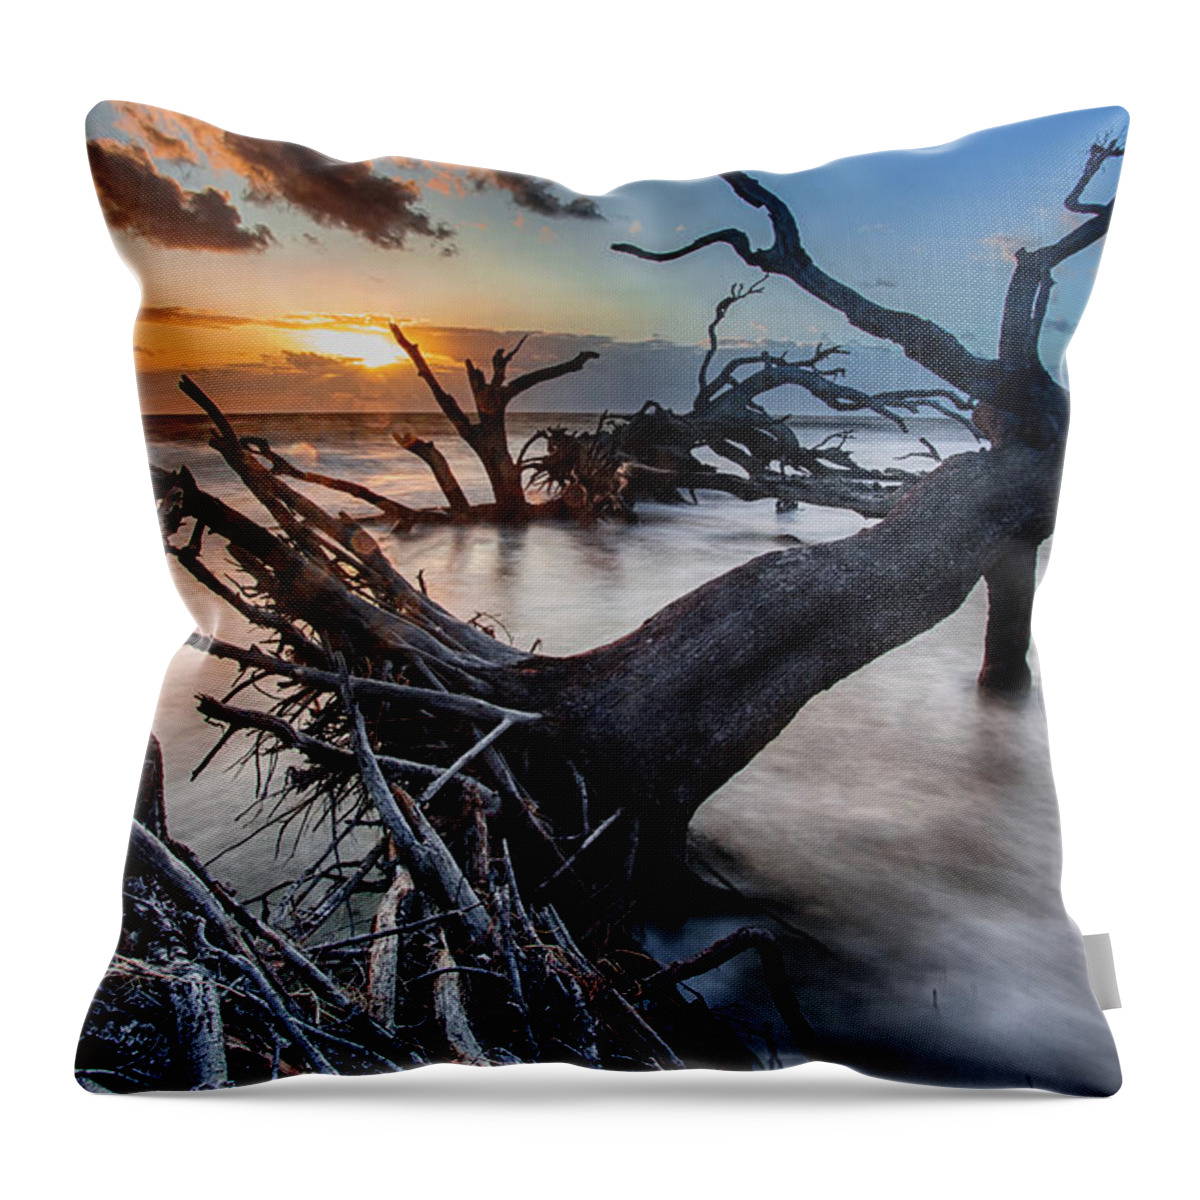 Landscape Throw Pillow featuring the photograph Driftwood Beach 6 by Dillon Kalkhurst